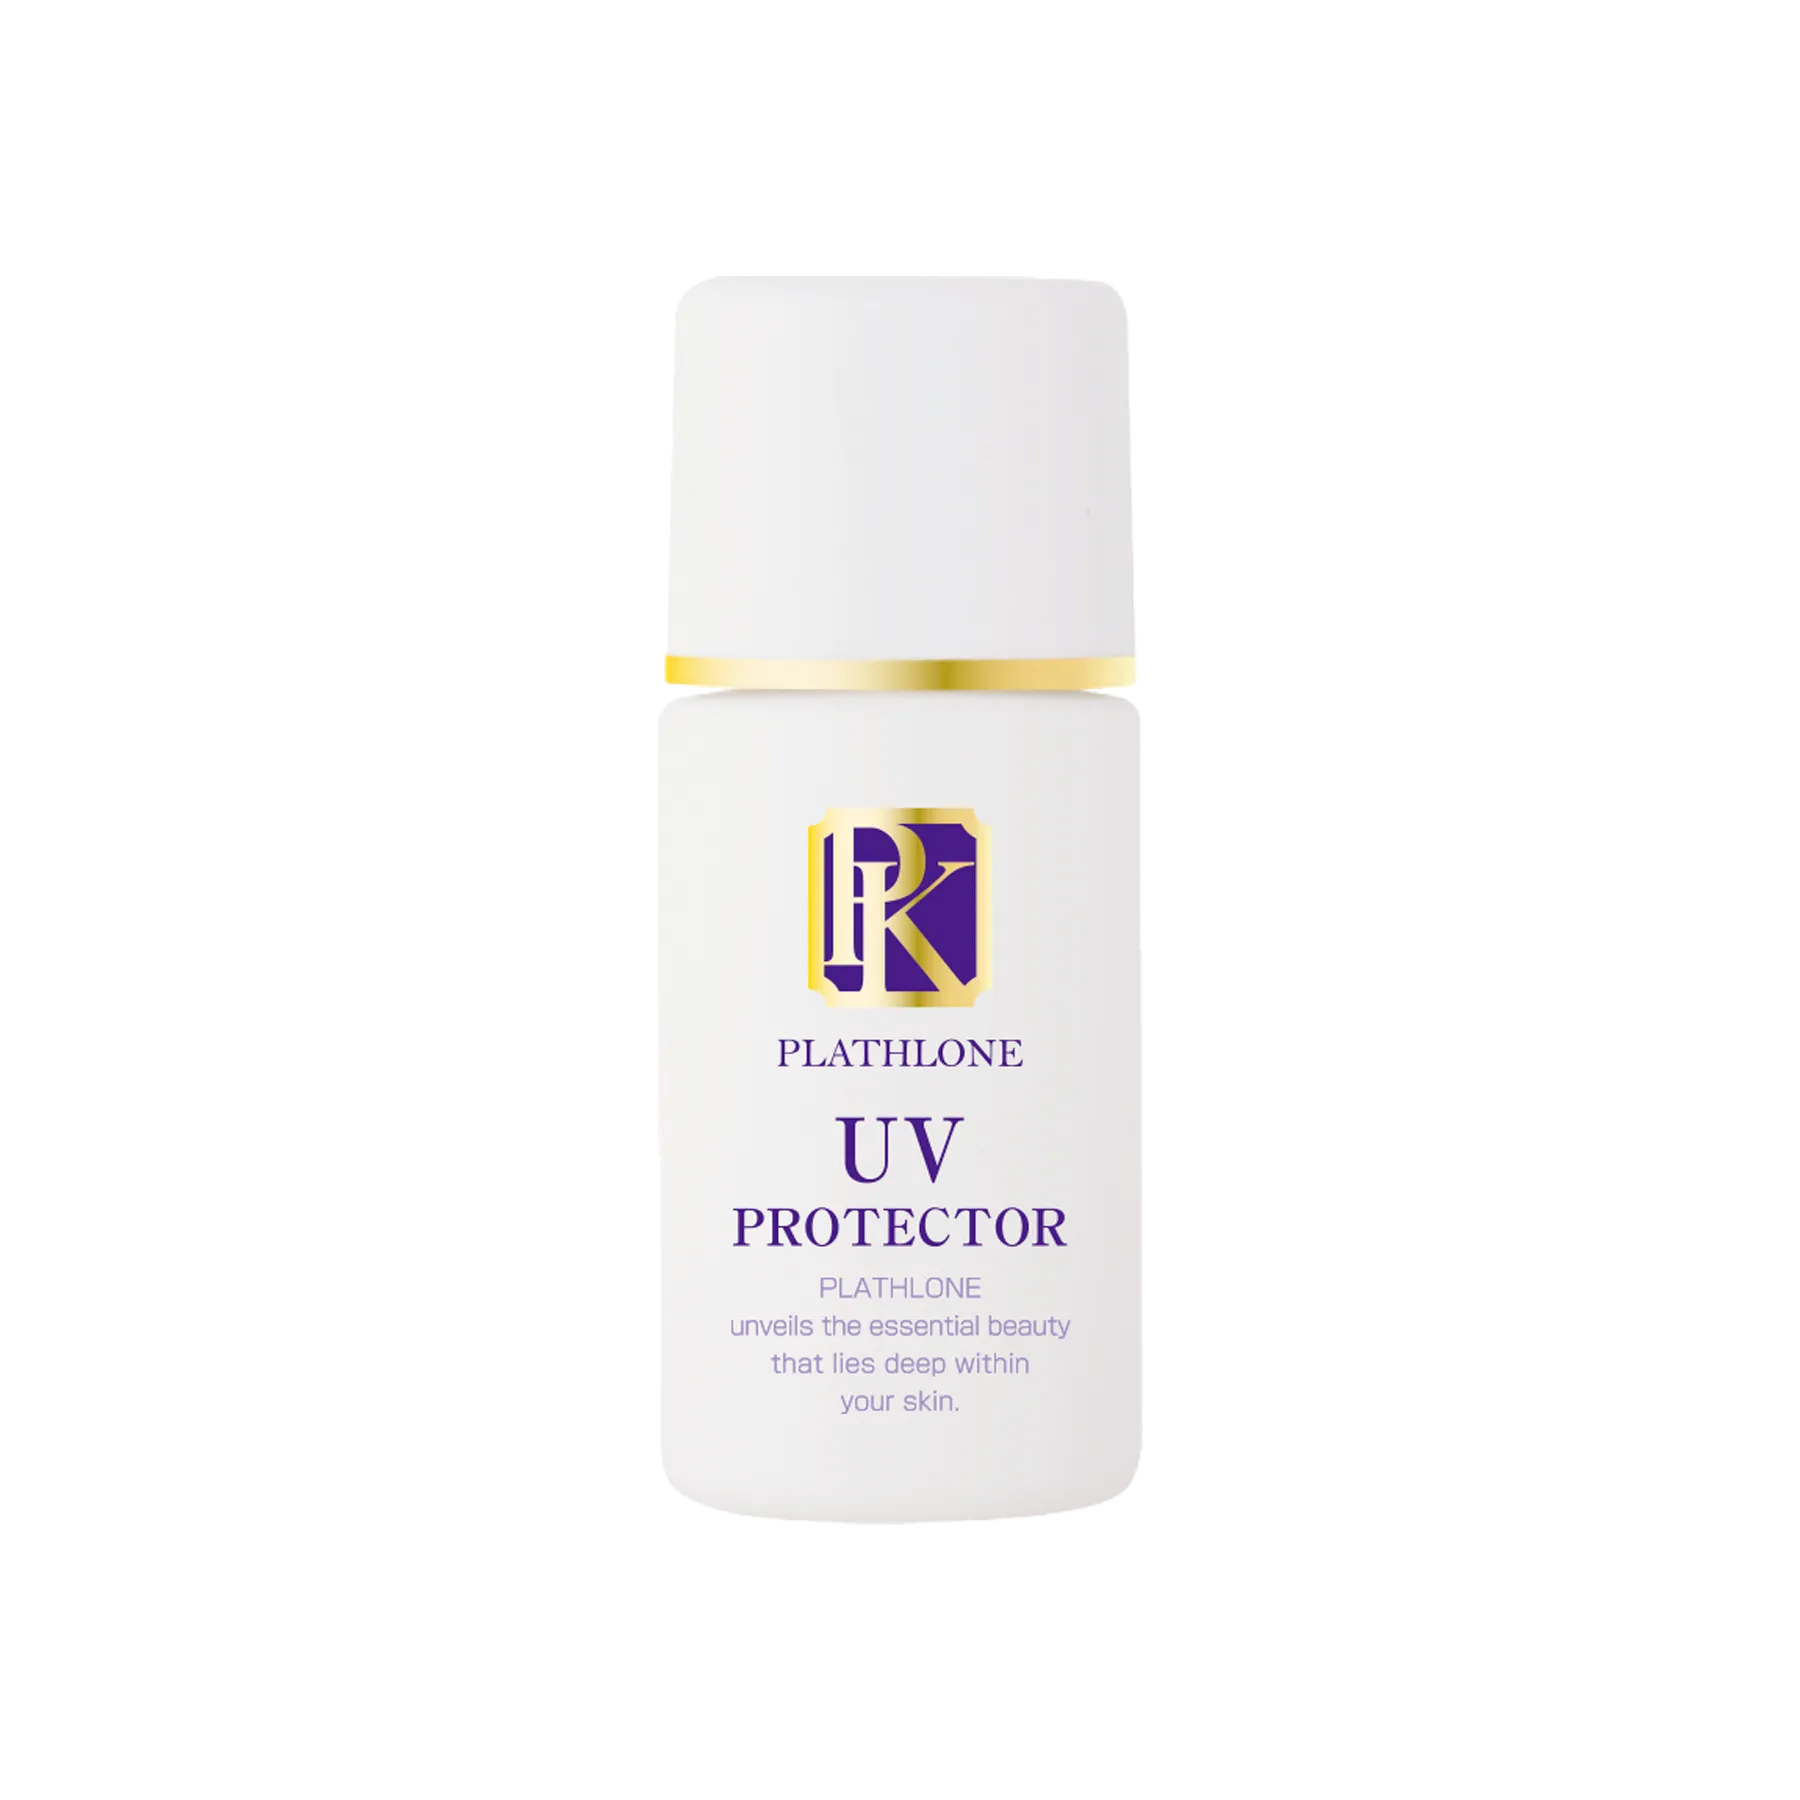 Плацентарный крем для лица Защита от Ультрафиолета  защита от солнца UV Protector  SPF18 Plathlone